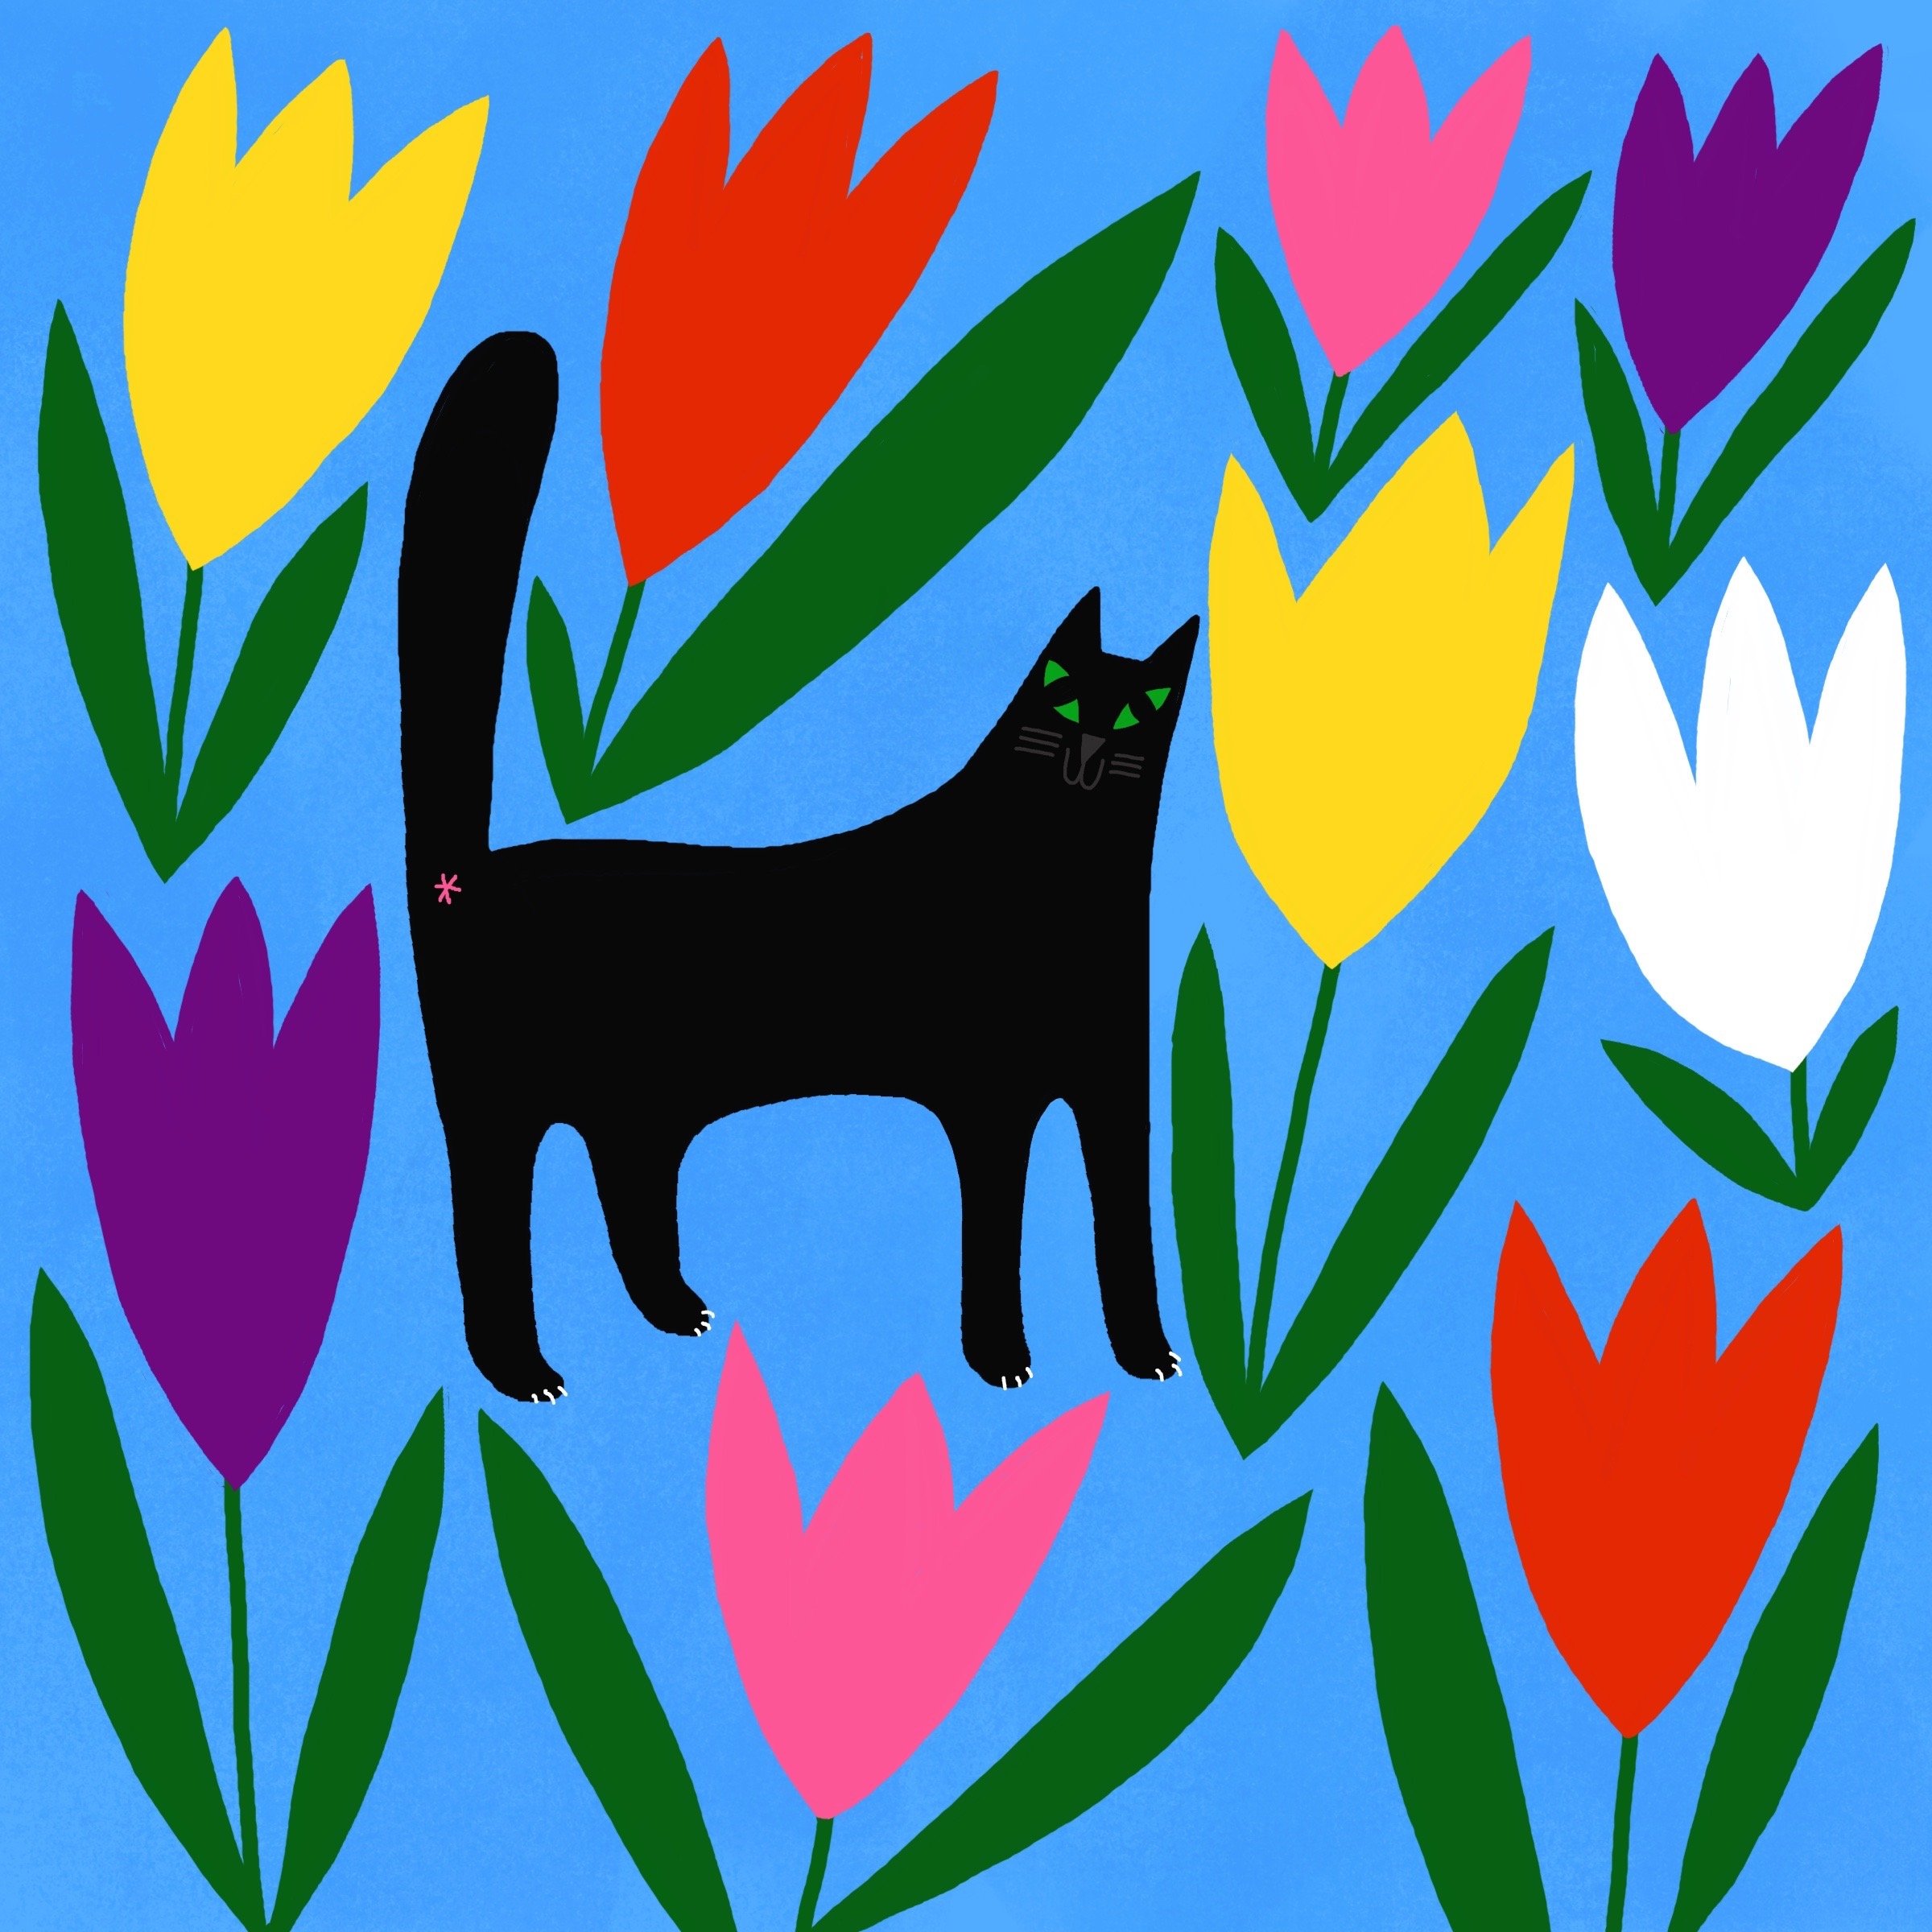 Black Cat with Tulips